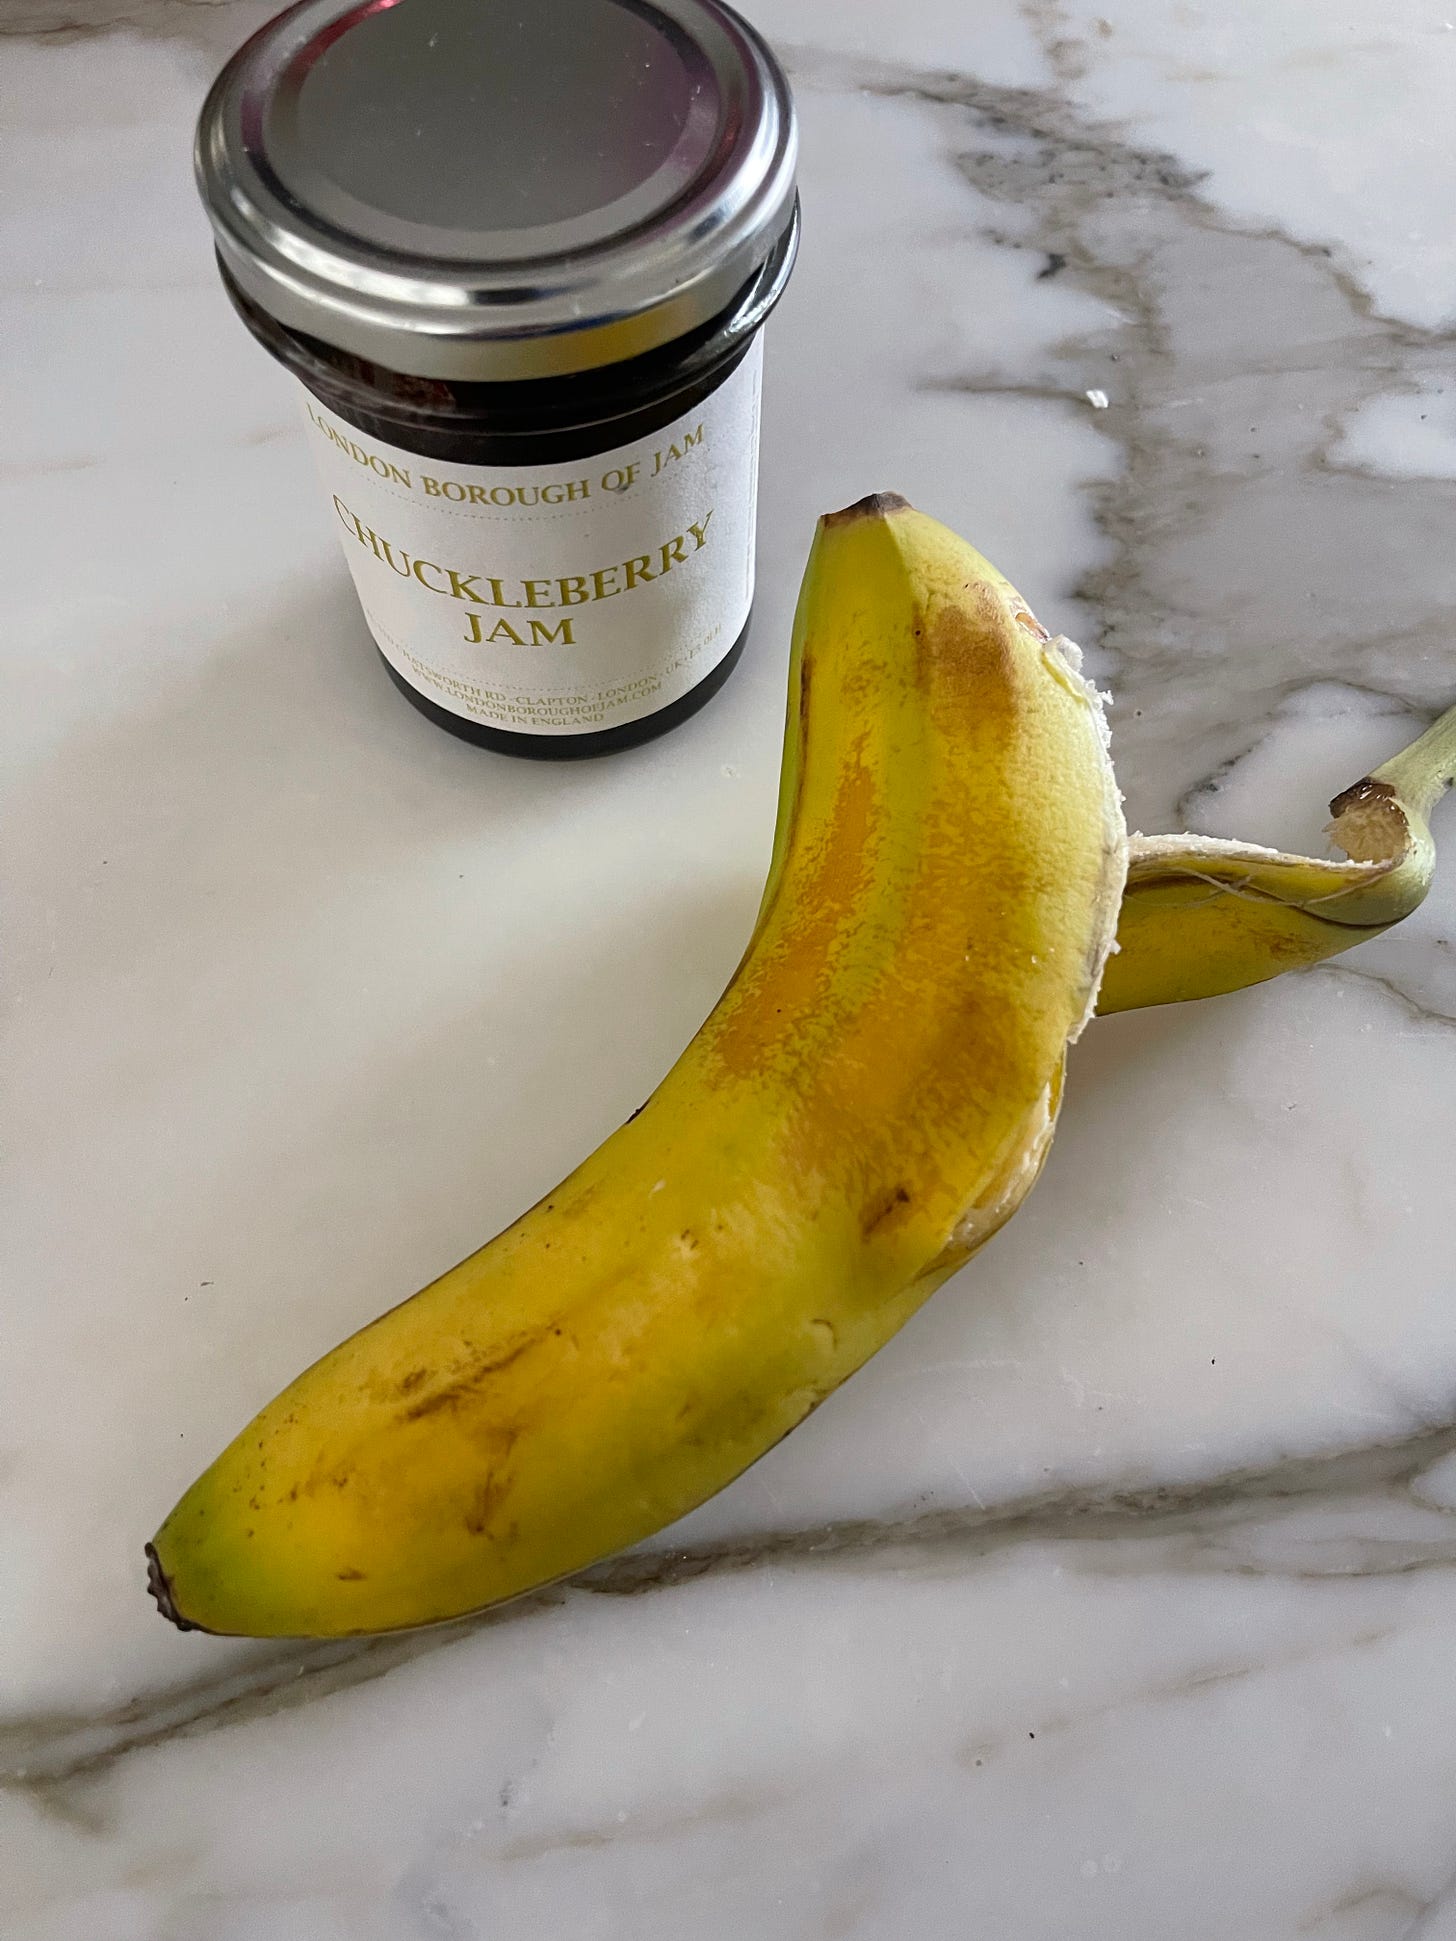 a half eaten banana sitting alongside a jar of jam